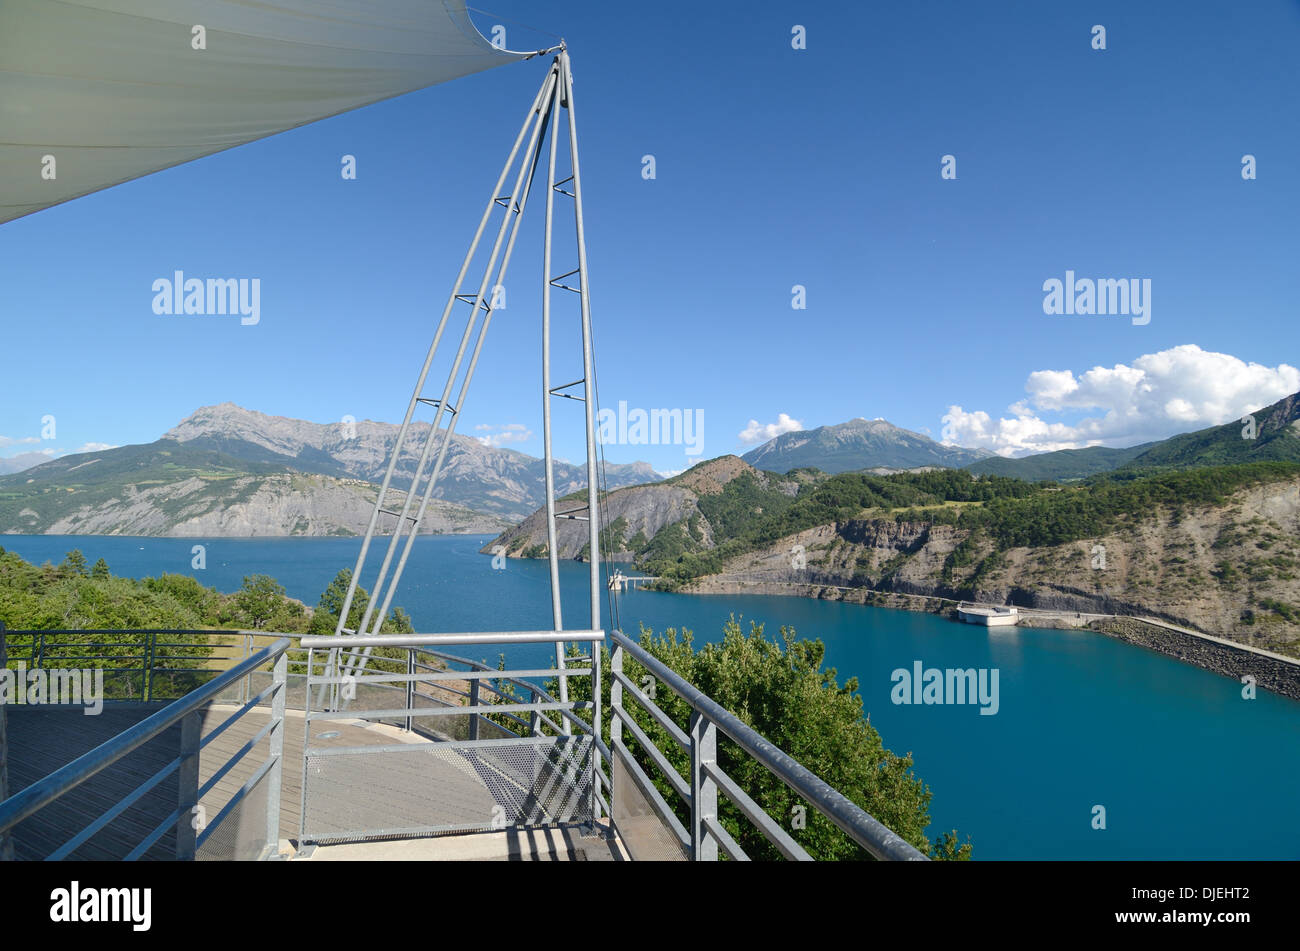 Viewing Platform Looking over the Lac de Serre-Ponçon or Serre Poncon Lake or Reservoir Barrage & Dam Hautes-Alpes or Hautes Alps France Stock Photo